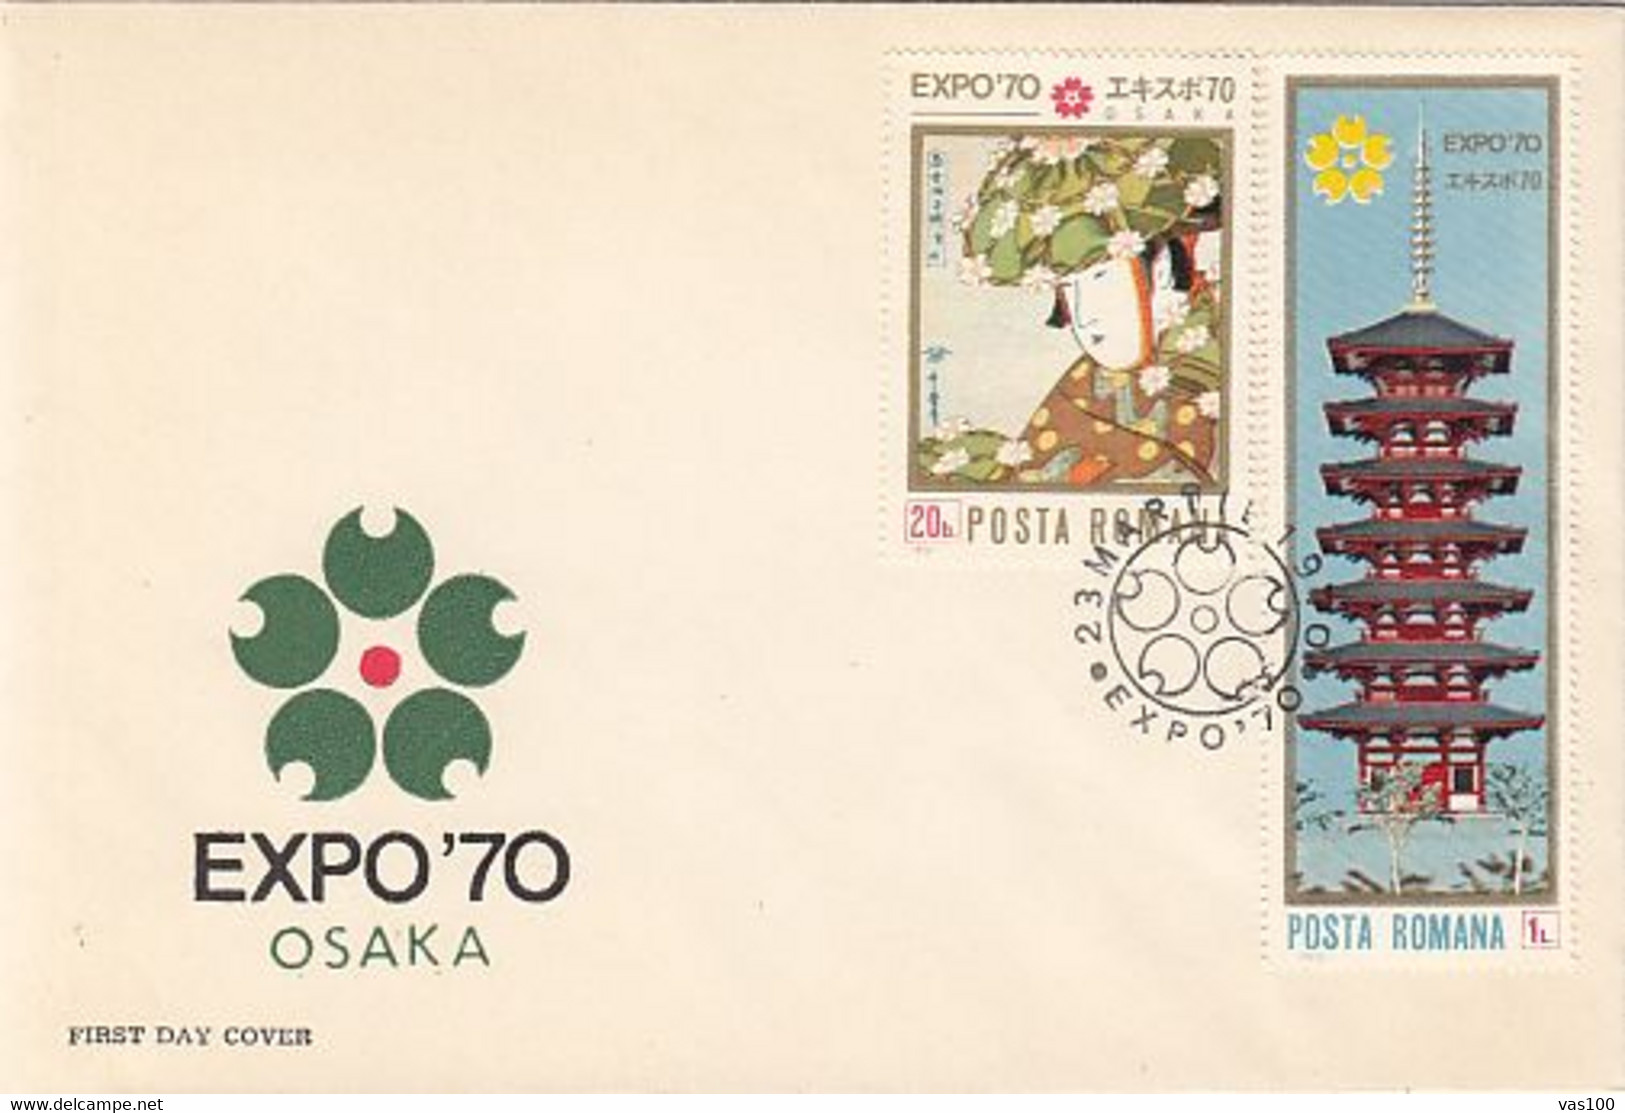 UNIVERSAL EXPOSITION, OSAKA'70, COVER FDC, 1970, ROMANIA - 1970 – Osaka (Japan)